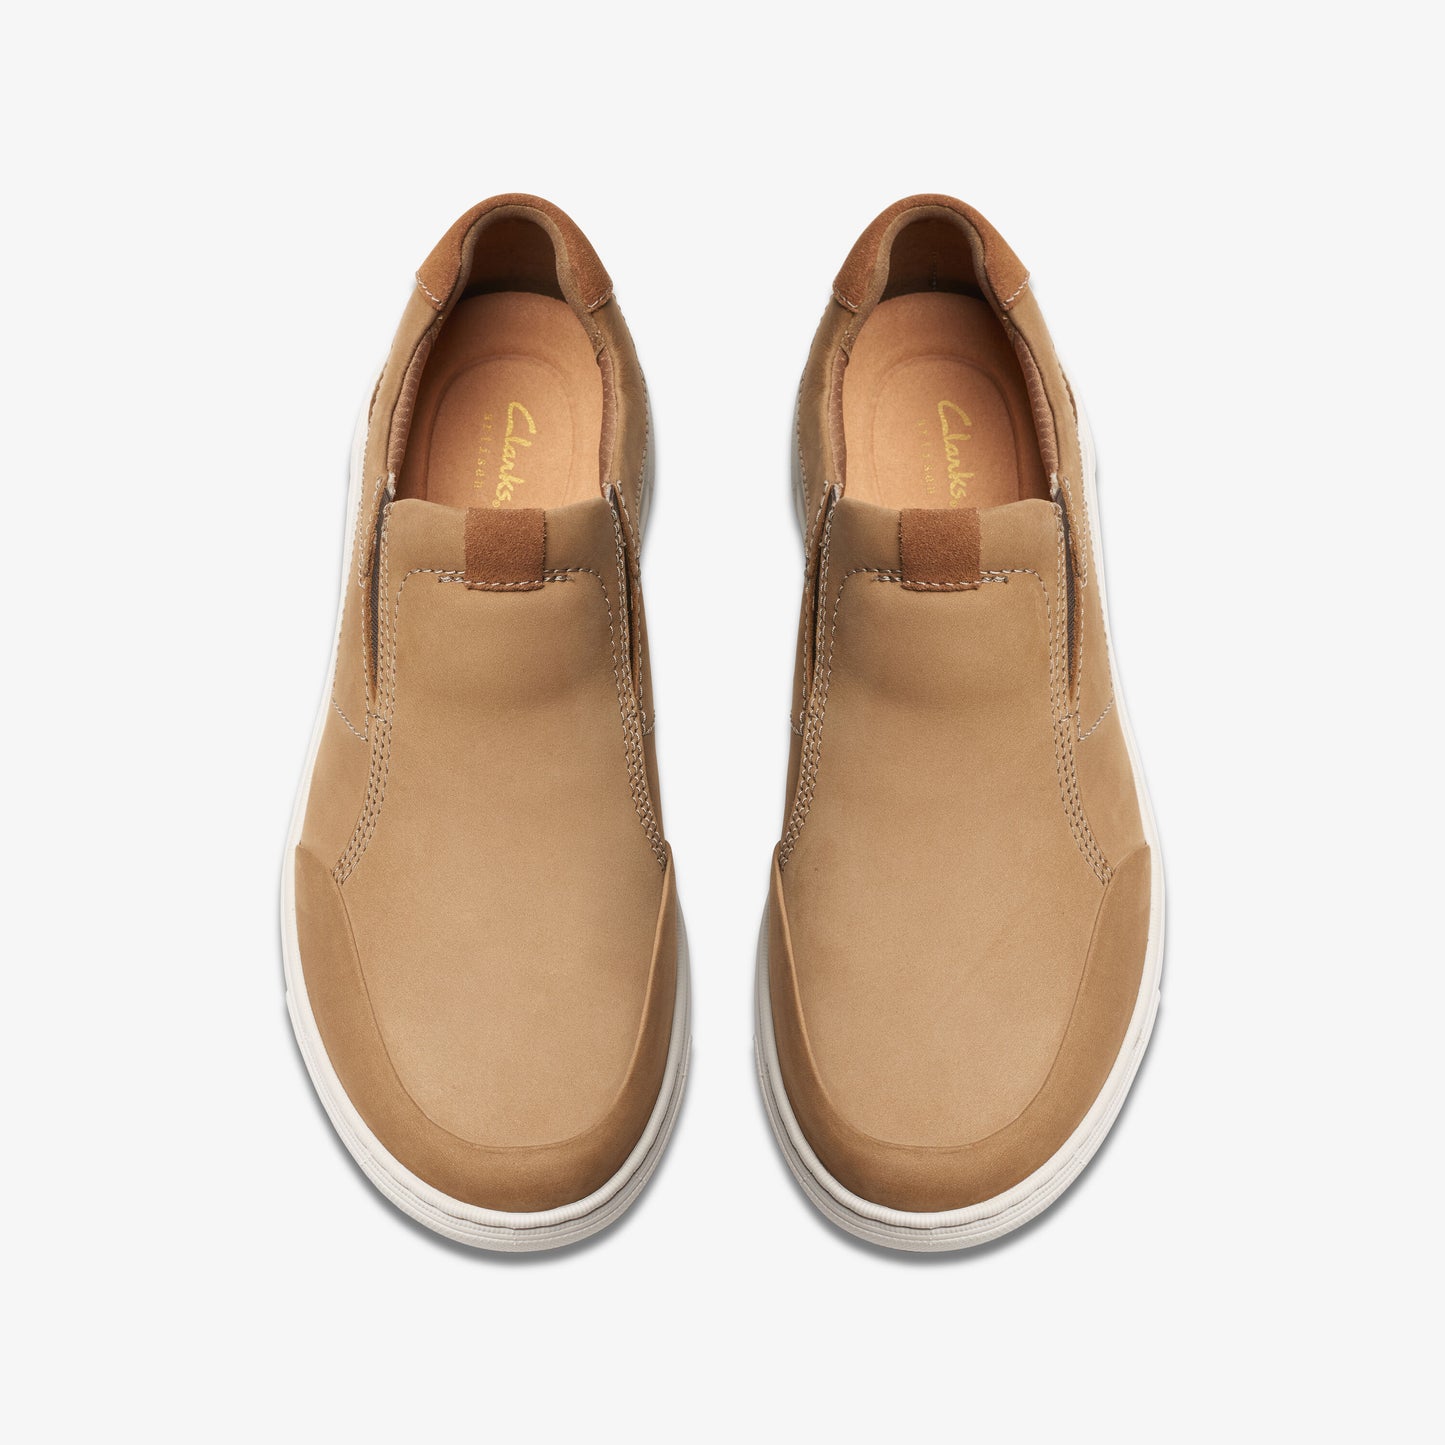 CLARKS | أحذية غير رسمية للرجال | MAPSTONE STEP SAND NUBUCK | اللون البيج